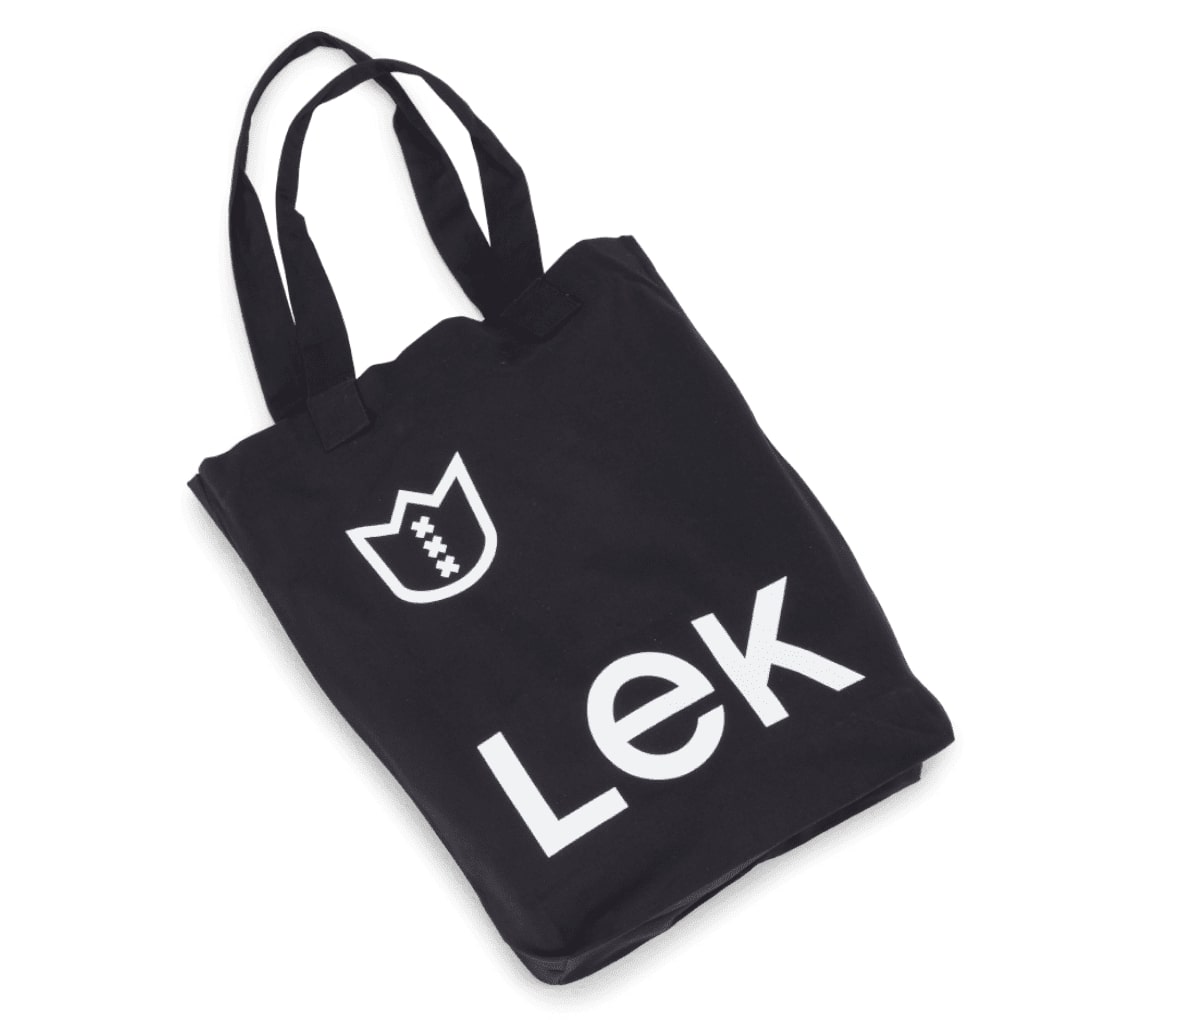 The LEKKER Tote Bag